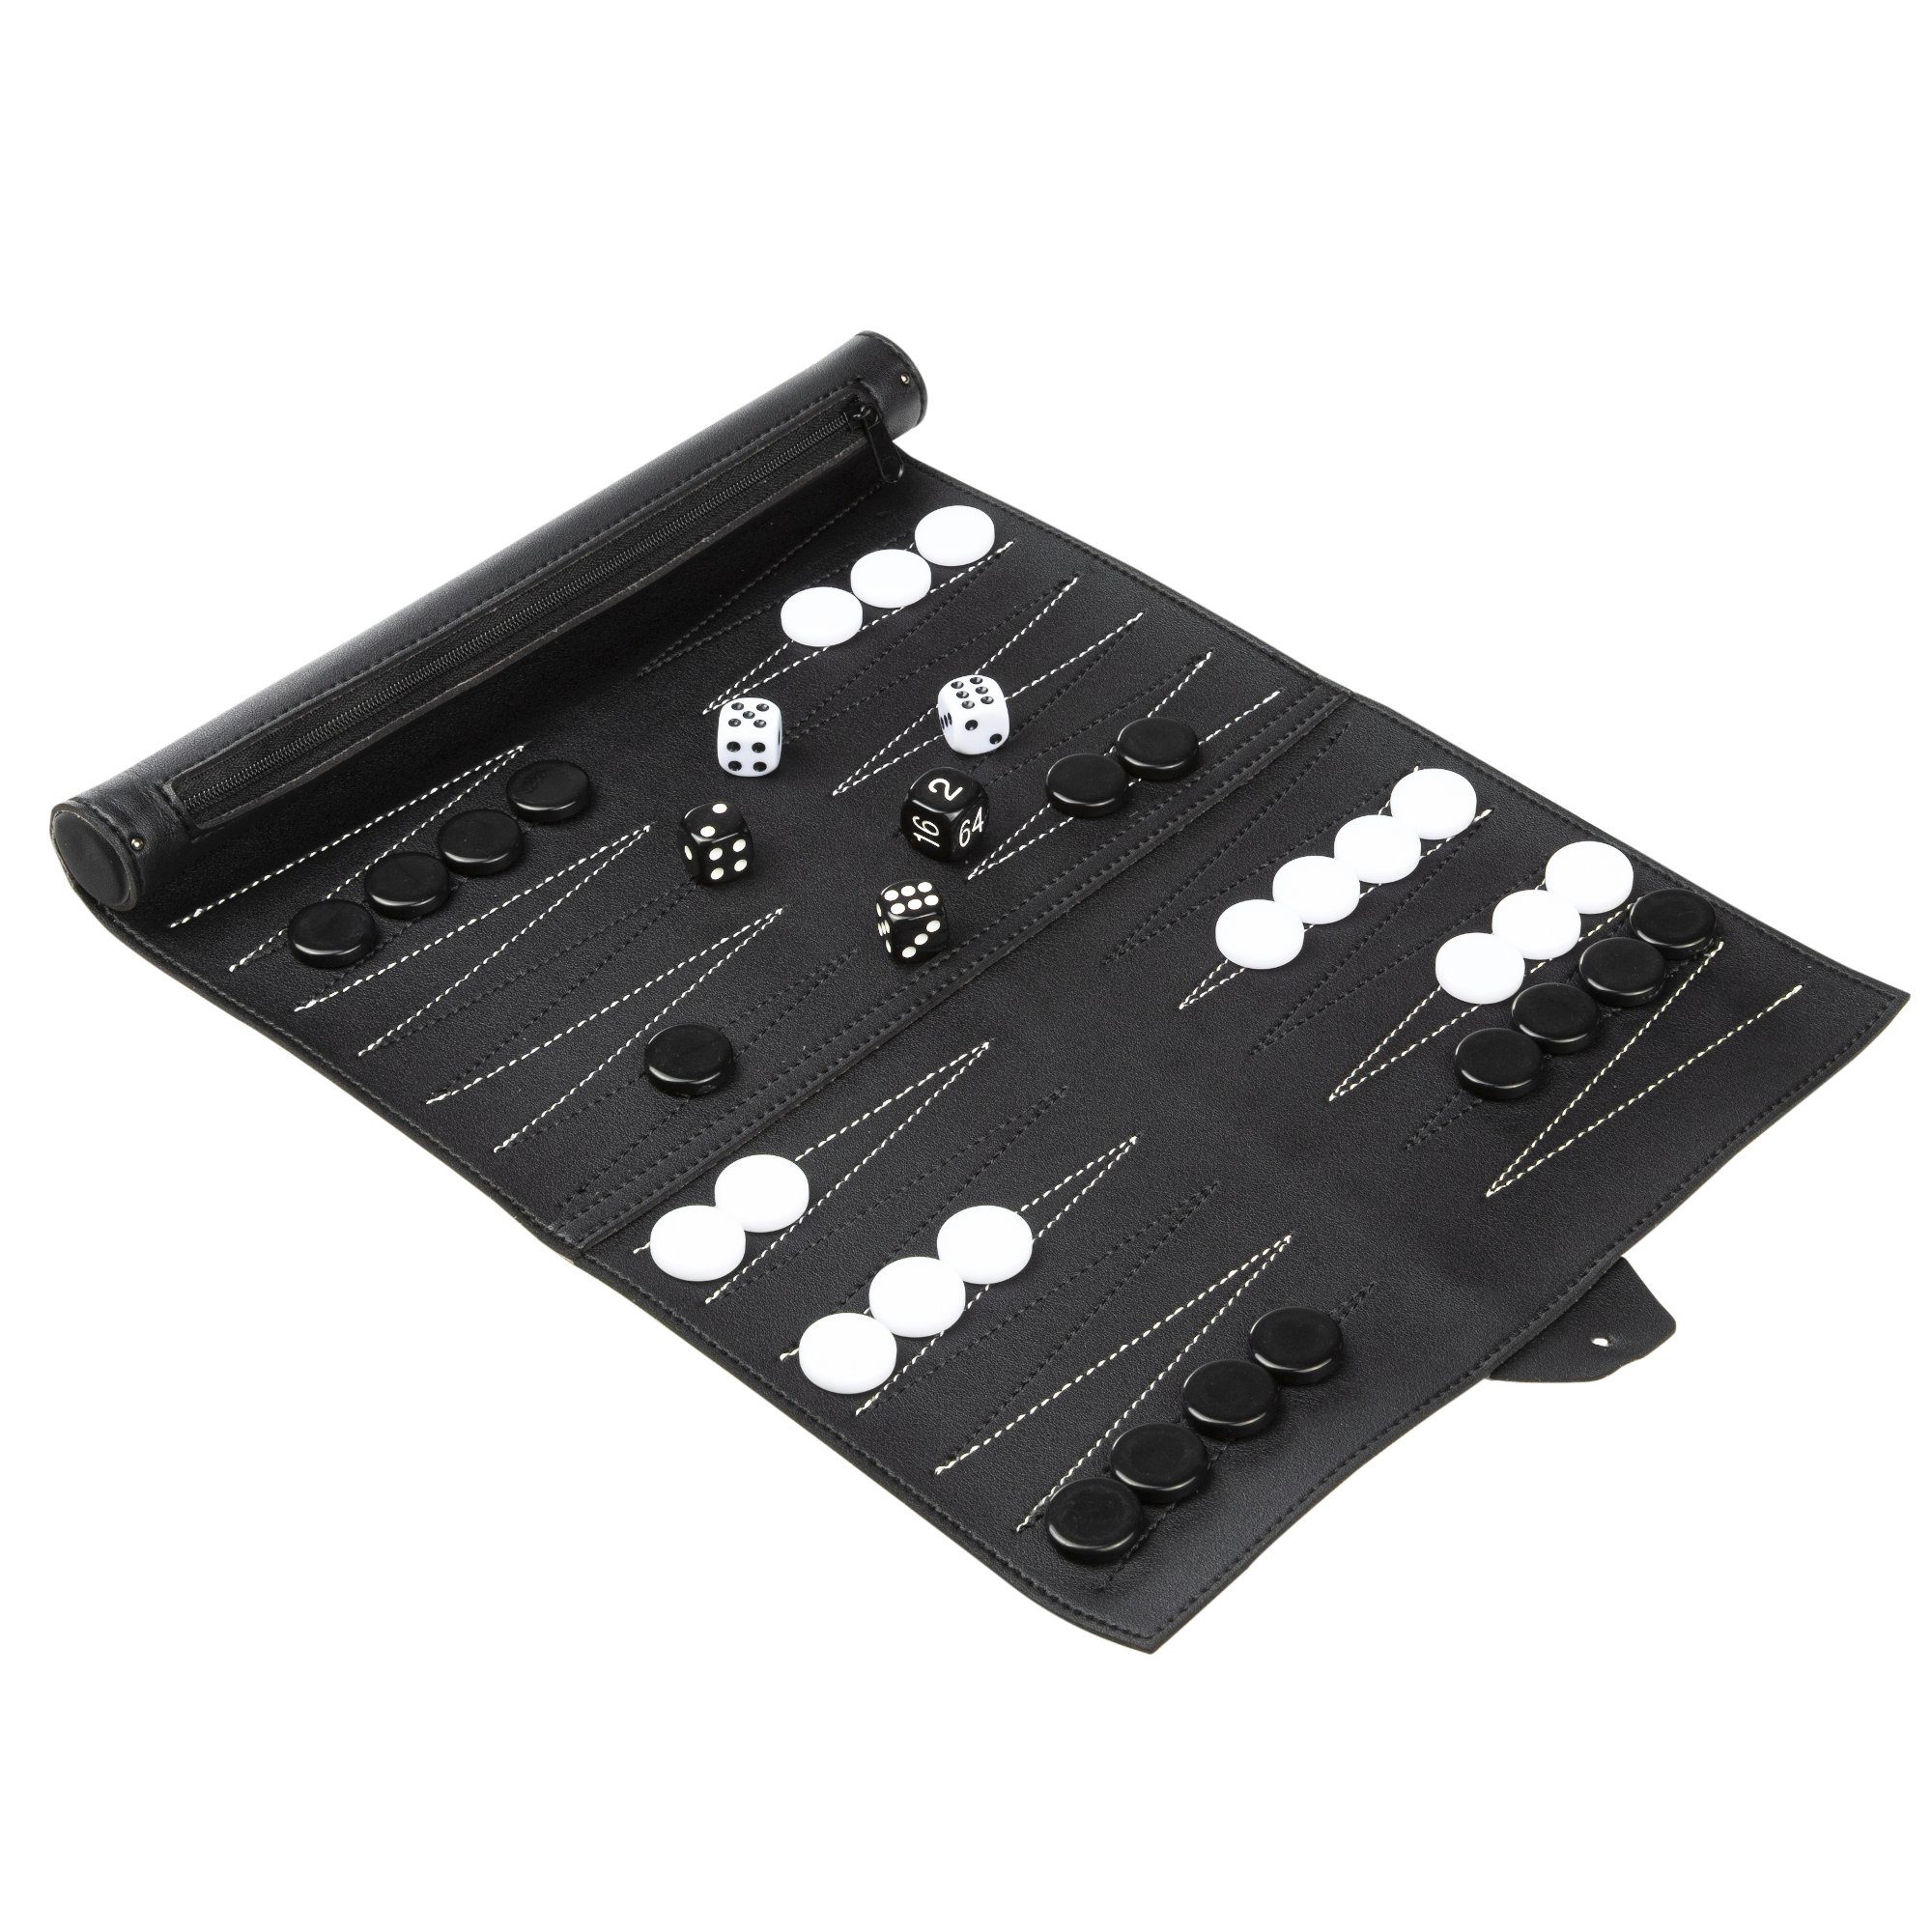 Reise-Backgammon Spiel, Reise Gravidus Brettspiel Backgammon Kompakt Reisespiel